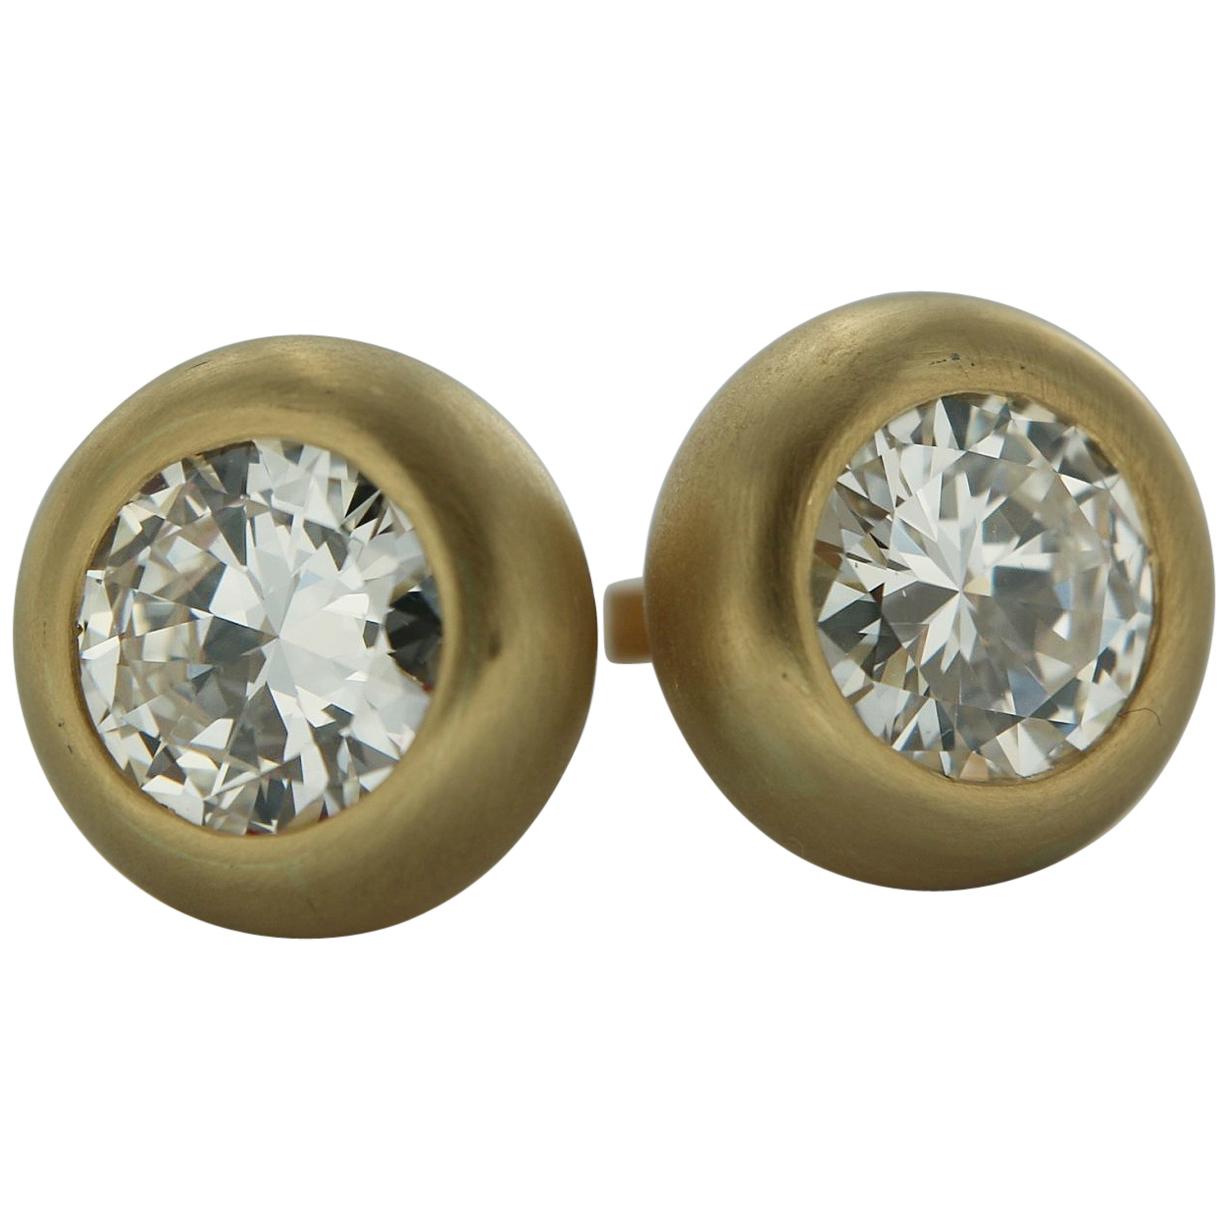 3.66 Carat Natural Diamond Solitaire Studs Earrings in 18 Karat Yellow Gold